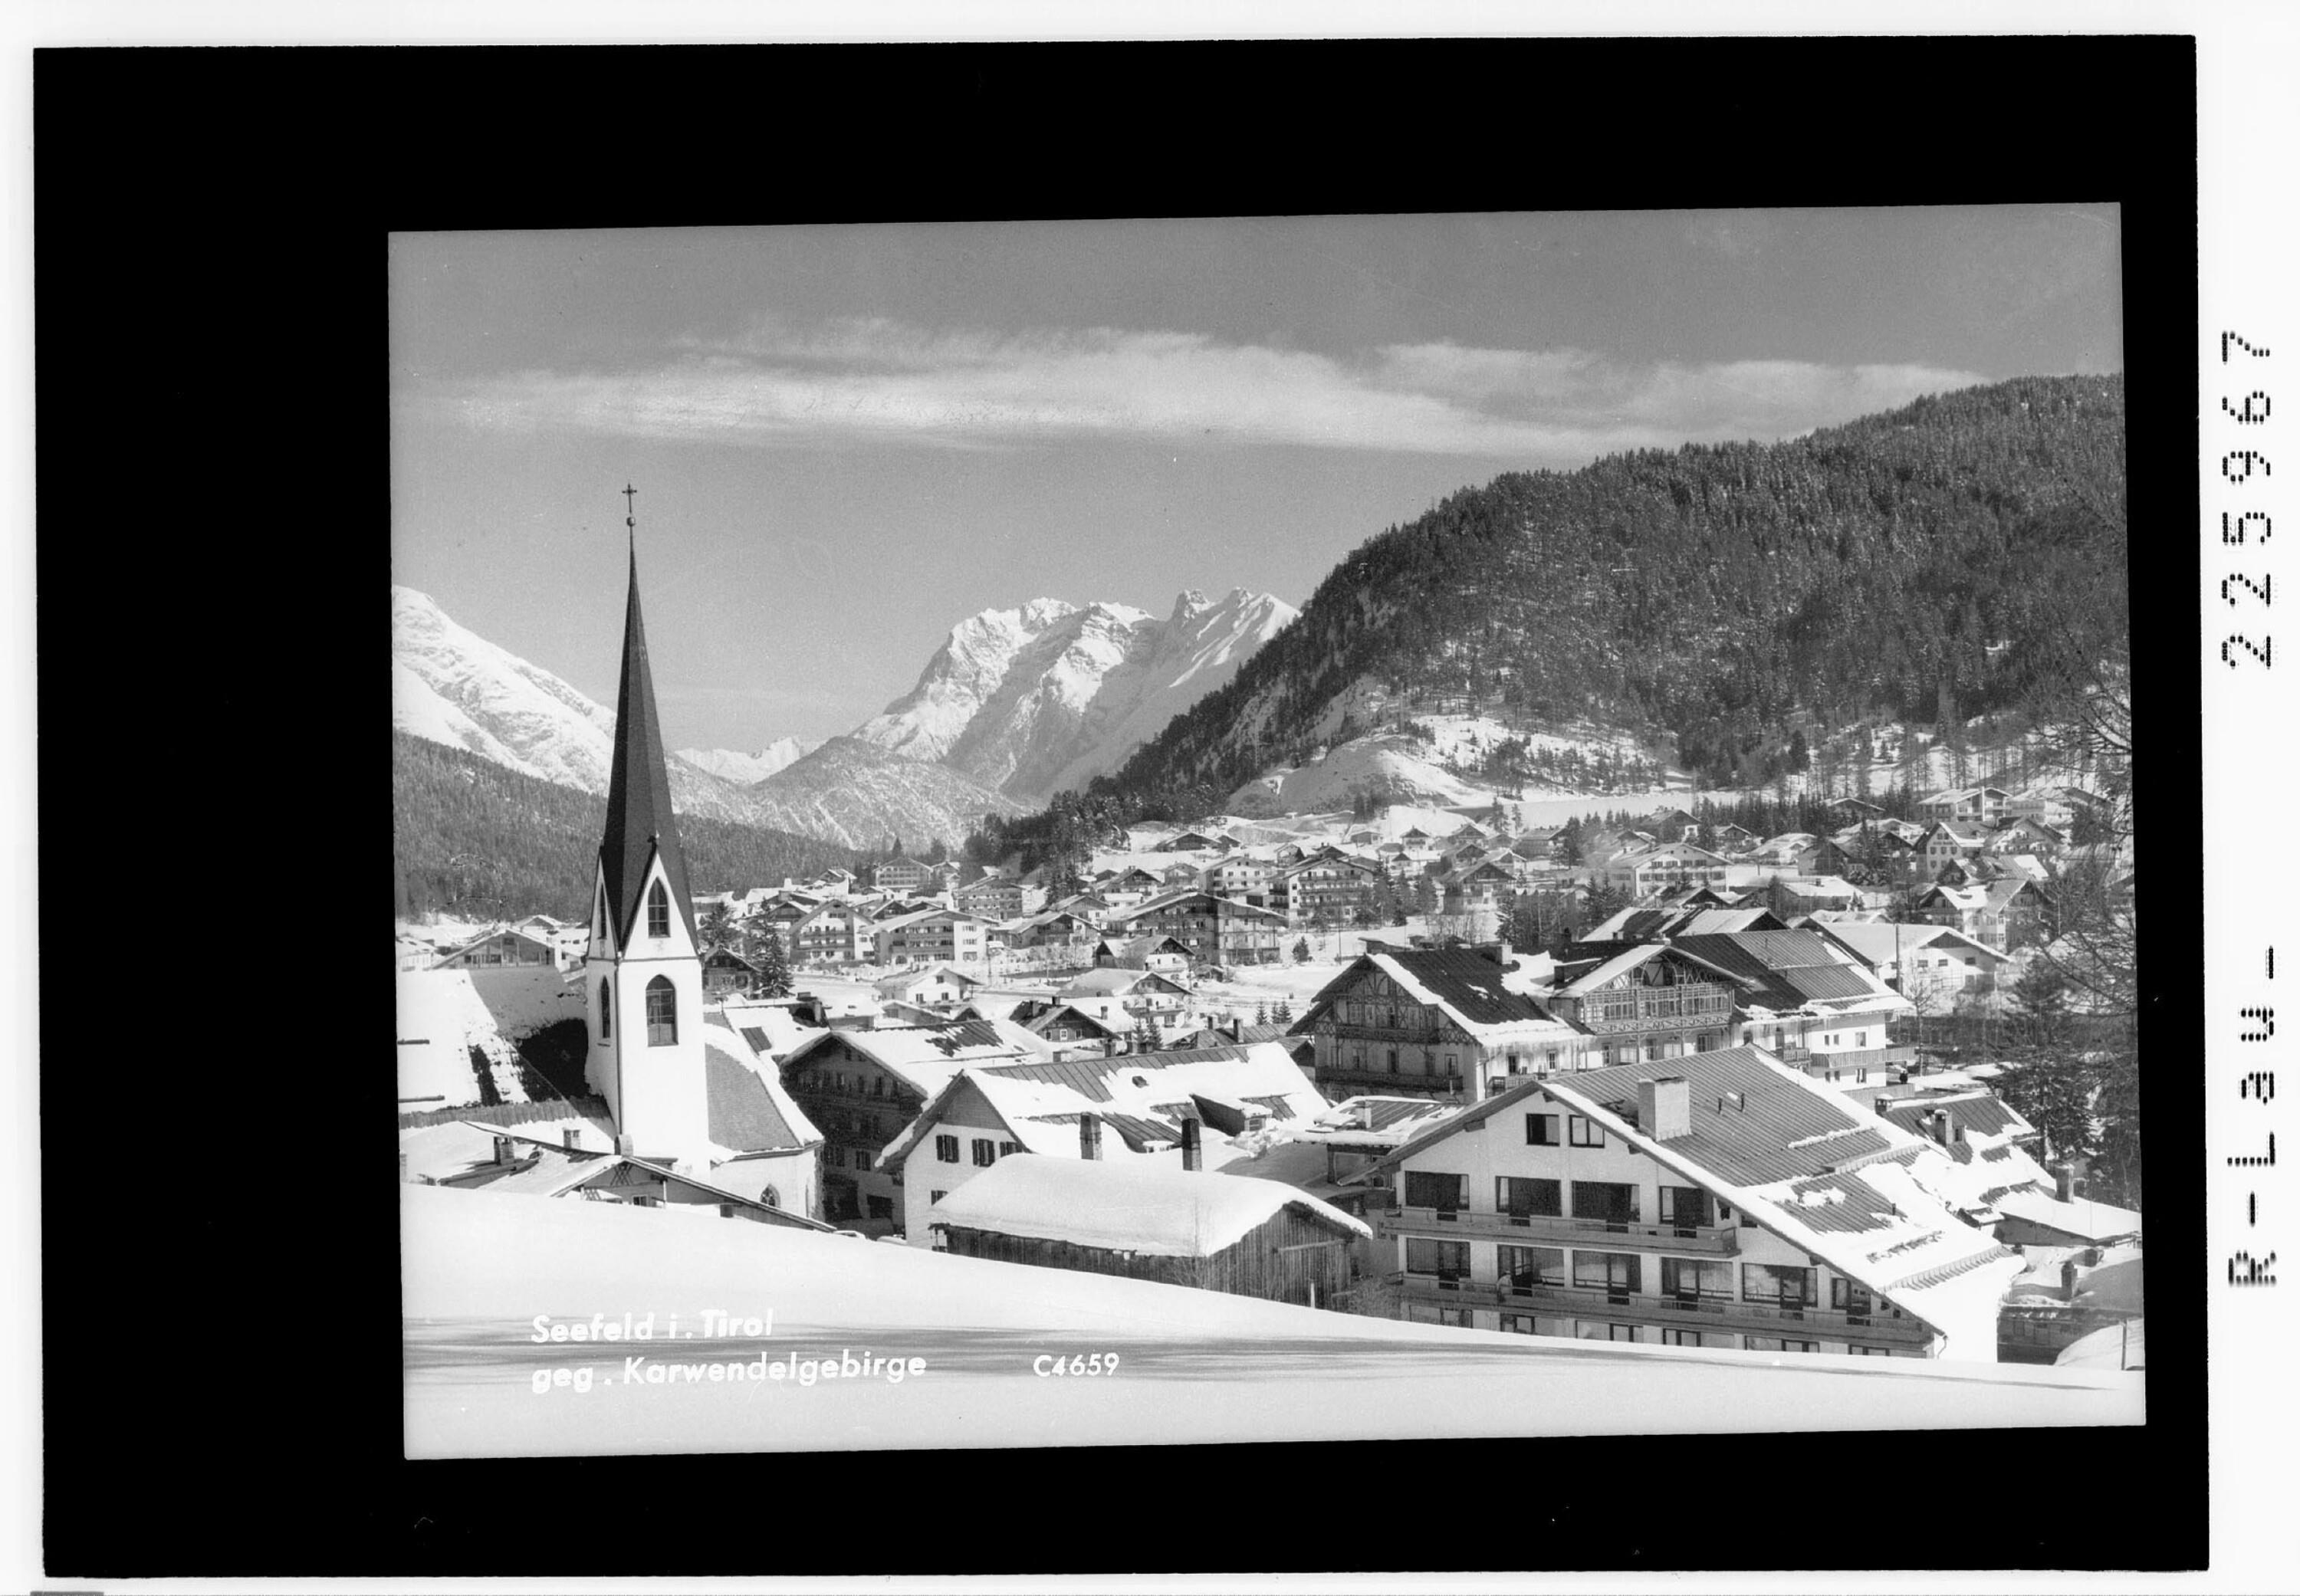 Seefeld in Tirol gegen Karwendelgebirge></div>


    <hr>
    <div class=